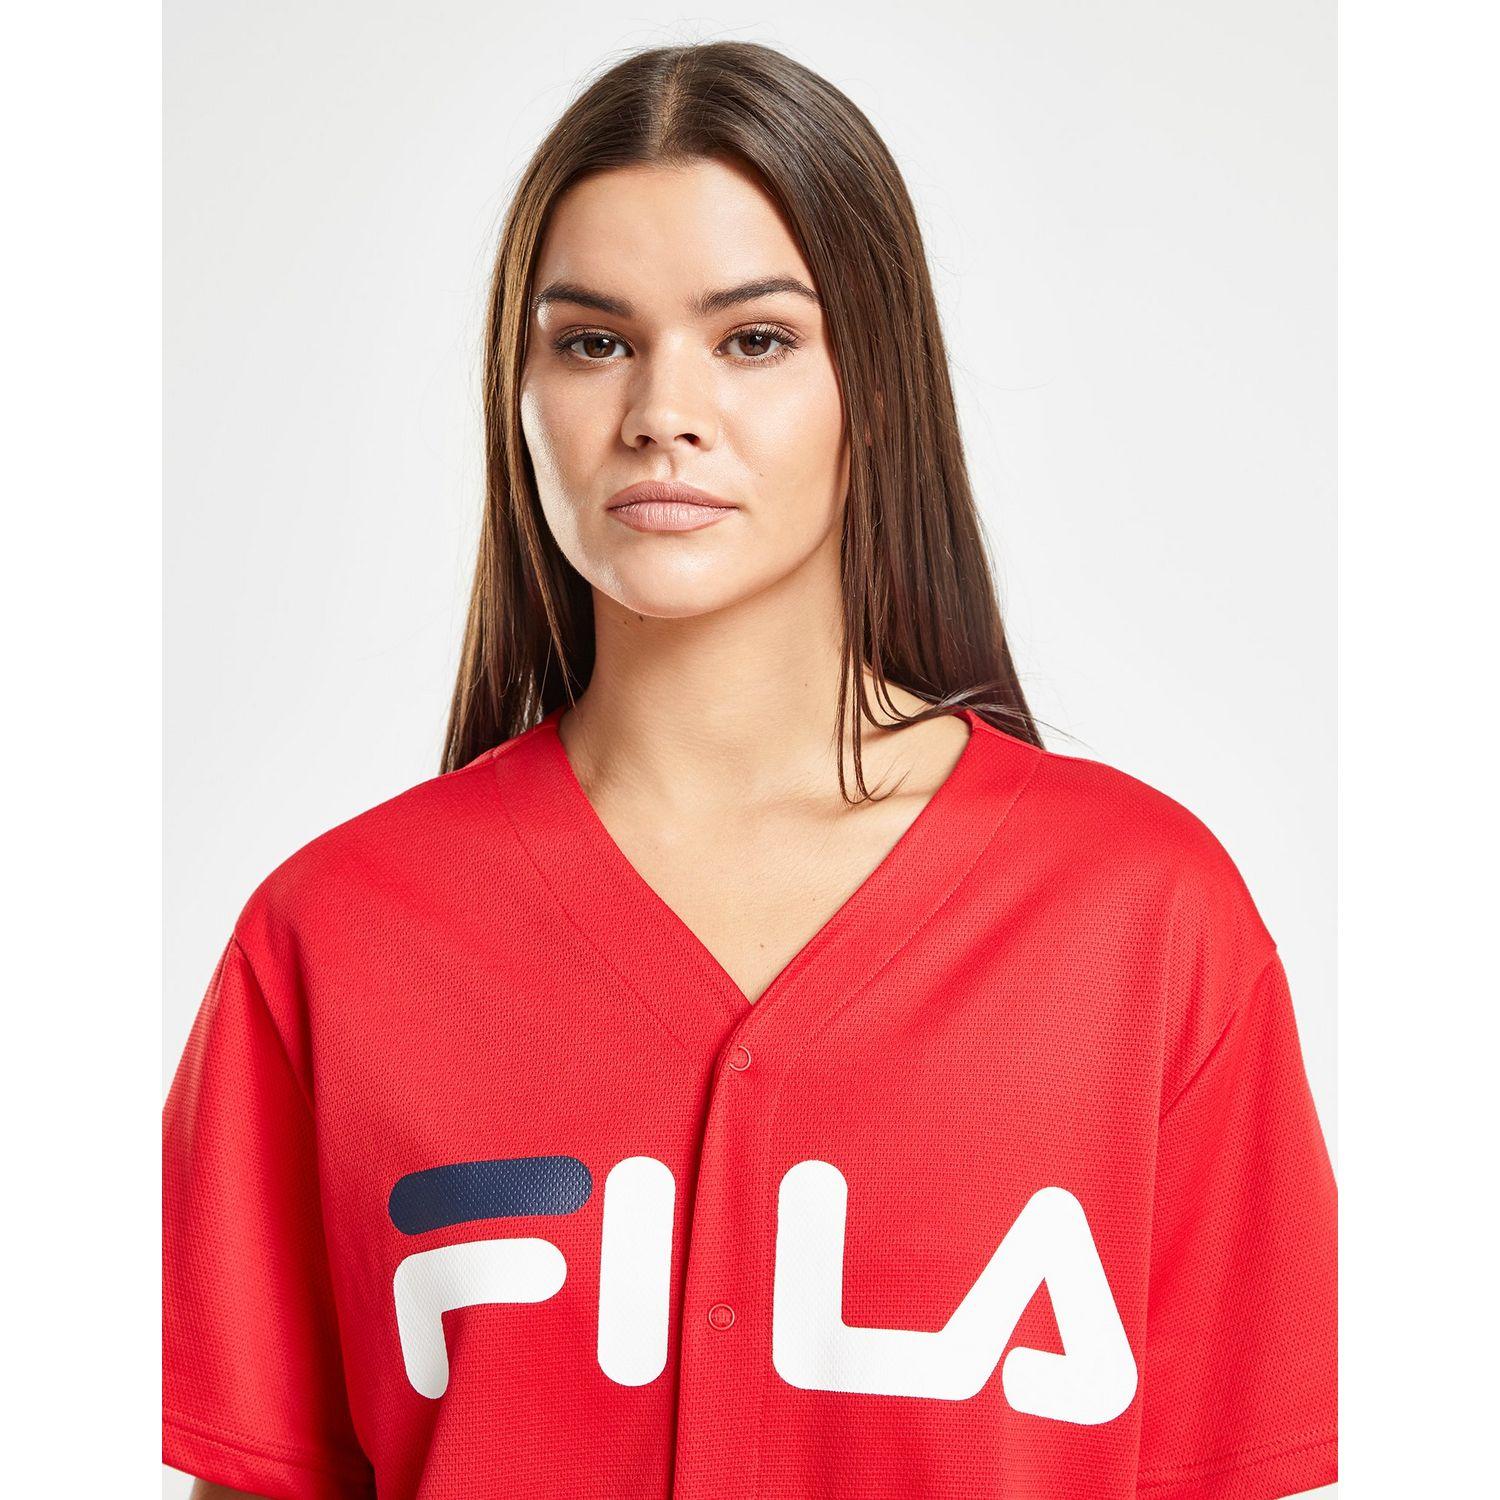 Fila Cotton Mesh Baseball T-shirt in Red/White/Navy (Red) - Lyst